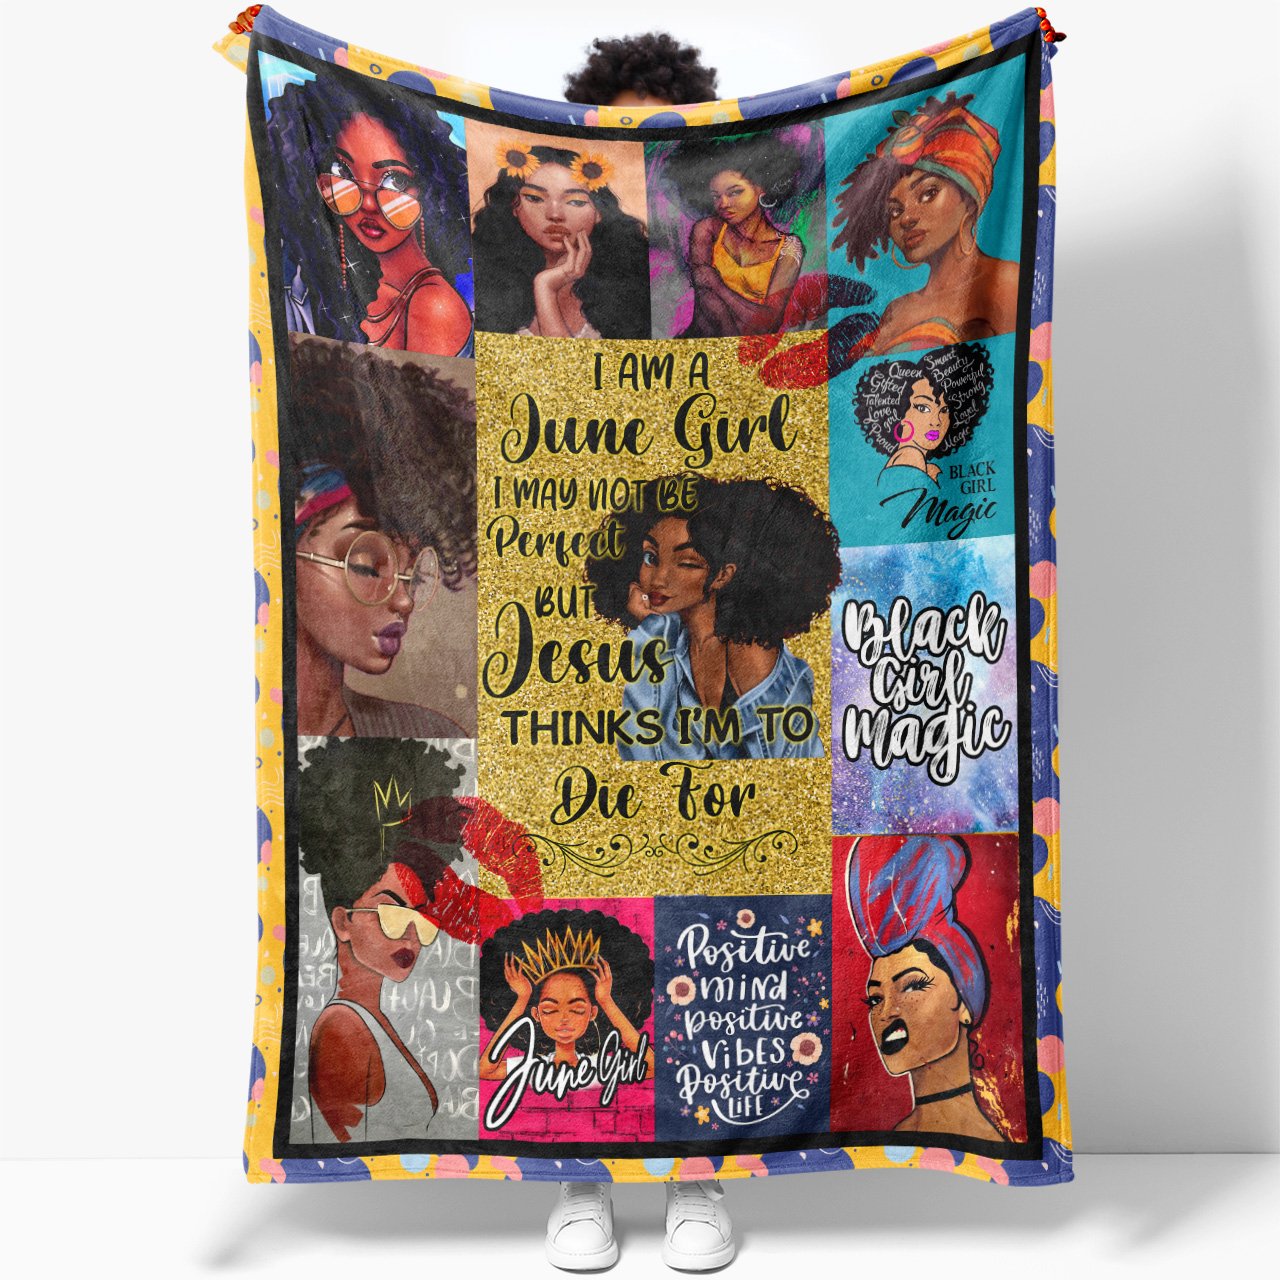 Blanket Birthday Gift Ideas For June Black Girl, Black Girl Magic, Not Be Perfect But Jesus Thinks I'm to Blanket for Black Daughter